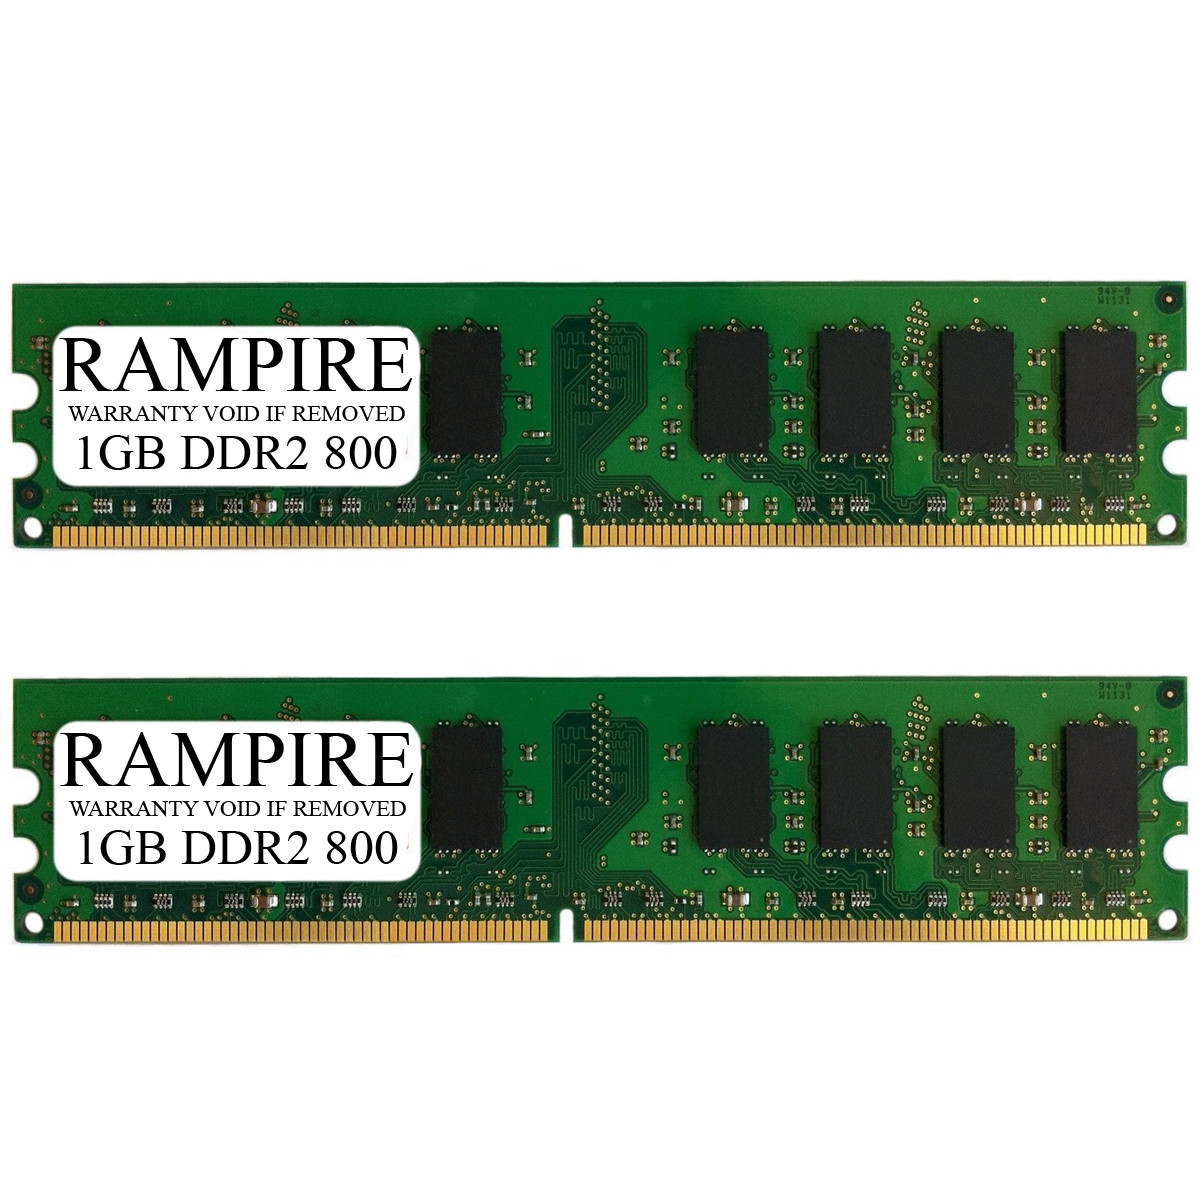 RAMPIRE 2GB (2 x 1GB) DDR2 800 (PC2 6400) 240-Pin DDR2 SDRAM 1.8V 2Rx8 Non-ECC UDIMM Memory for Desktop PC